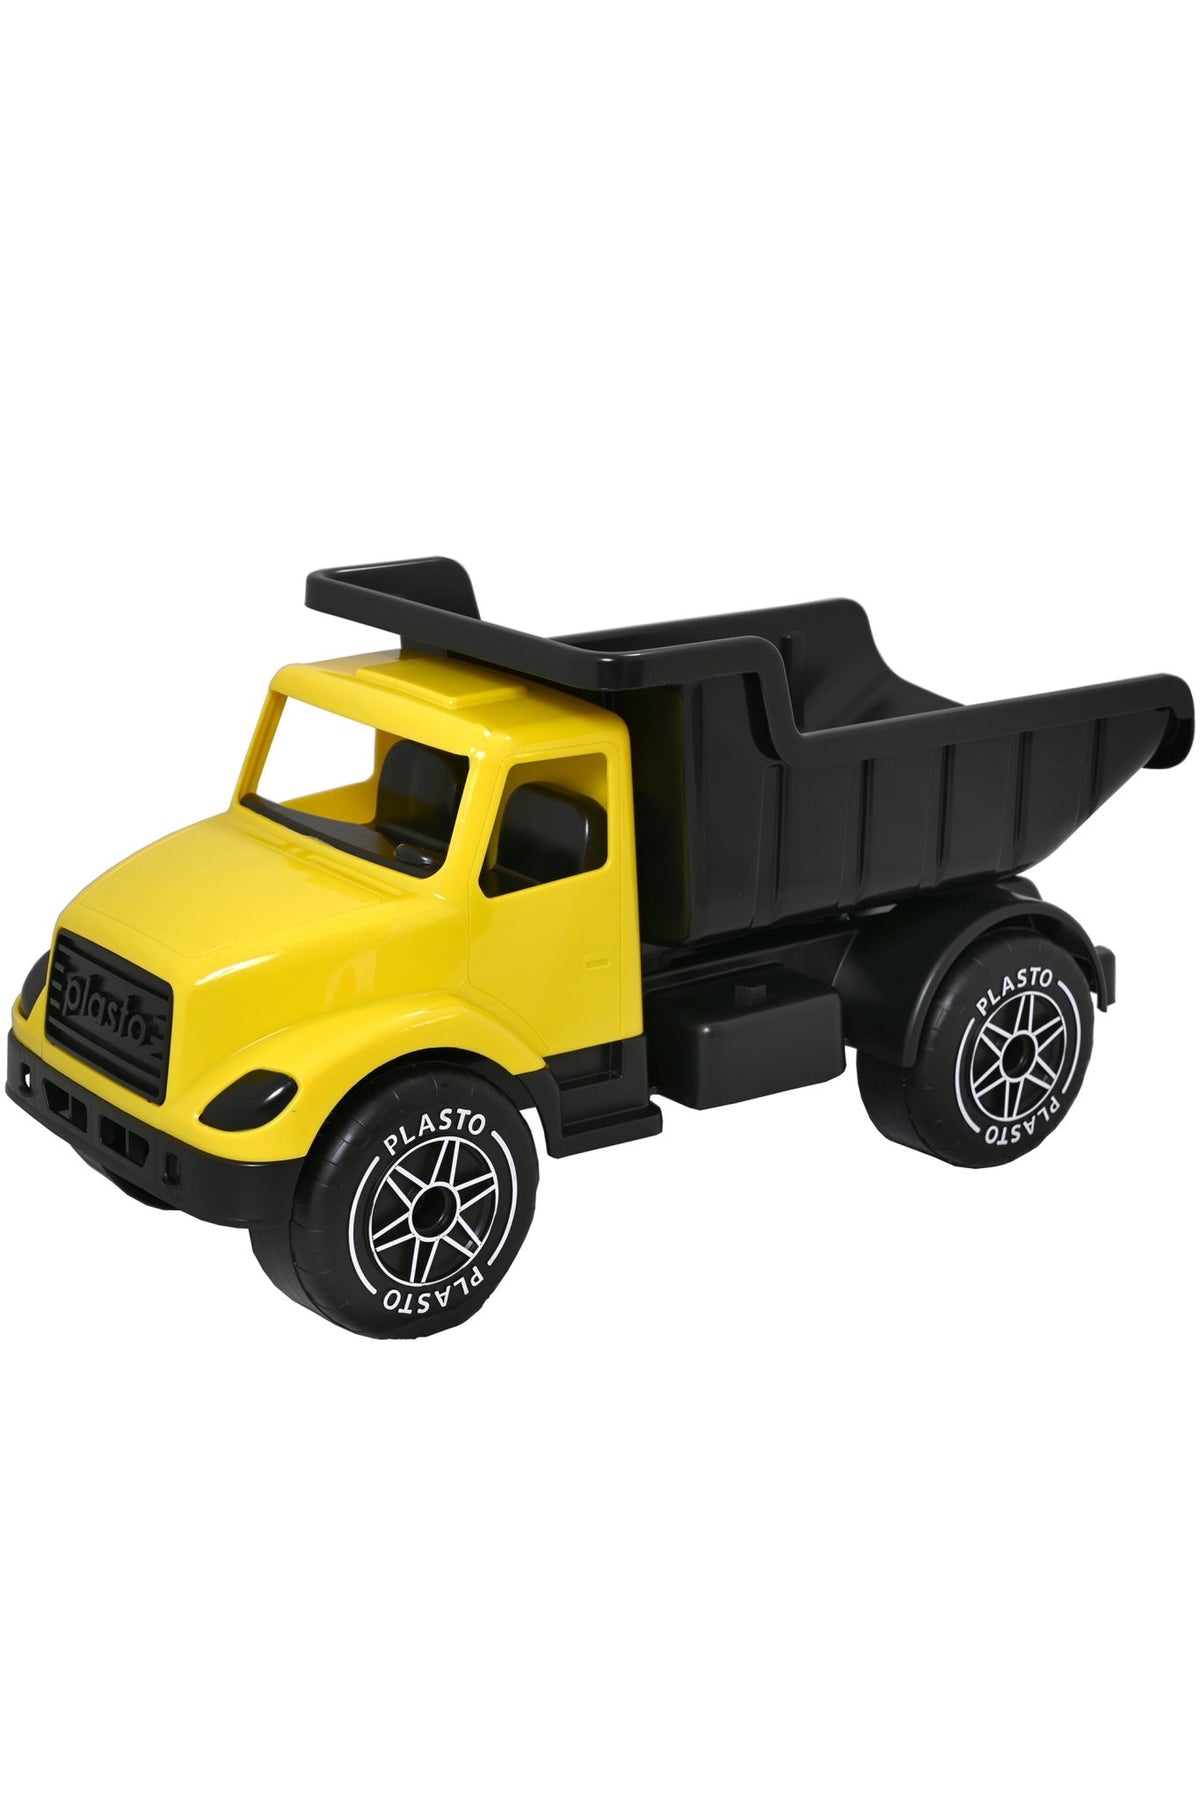 Dump truck with silent wheels (60cm), yellow and black - Koko-Kamel.com